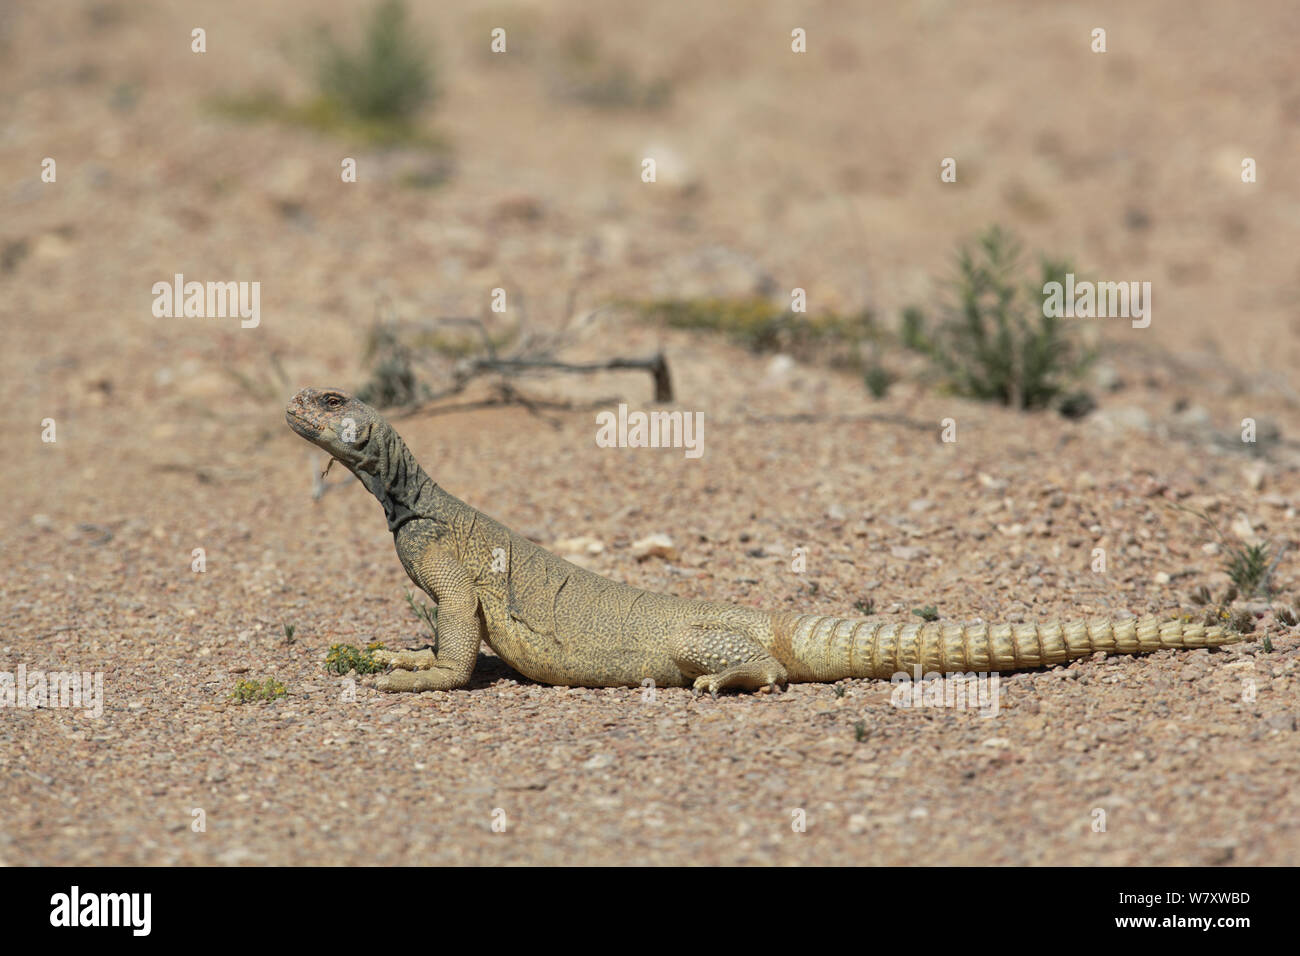 Spiny tailed lizard (Uromastyx aegyptia microlepis) Oman, January Stock Photo